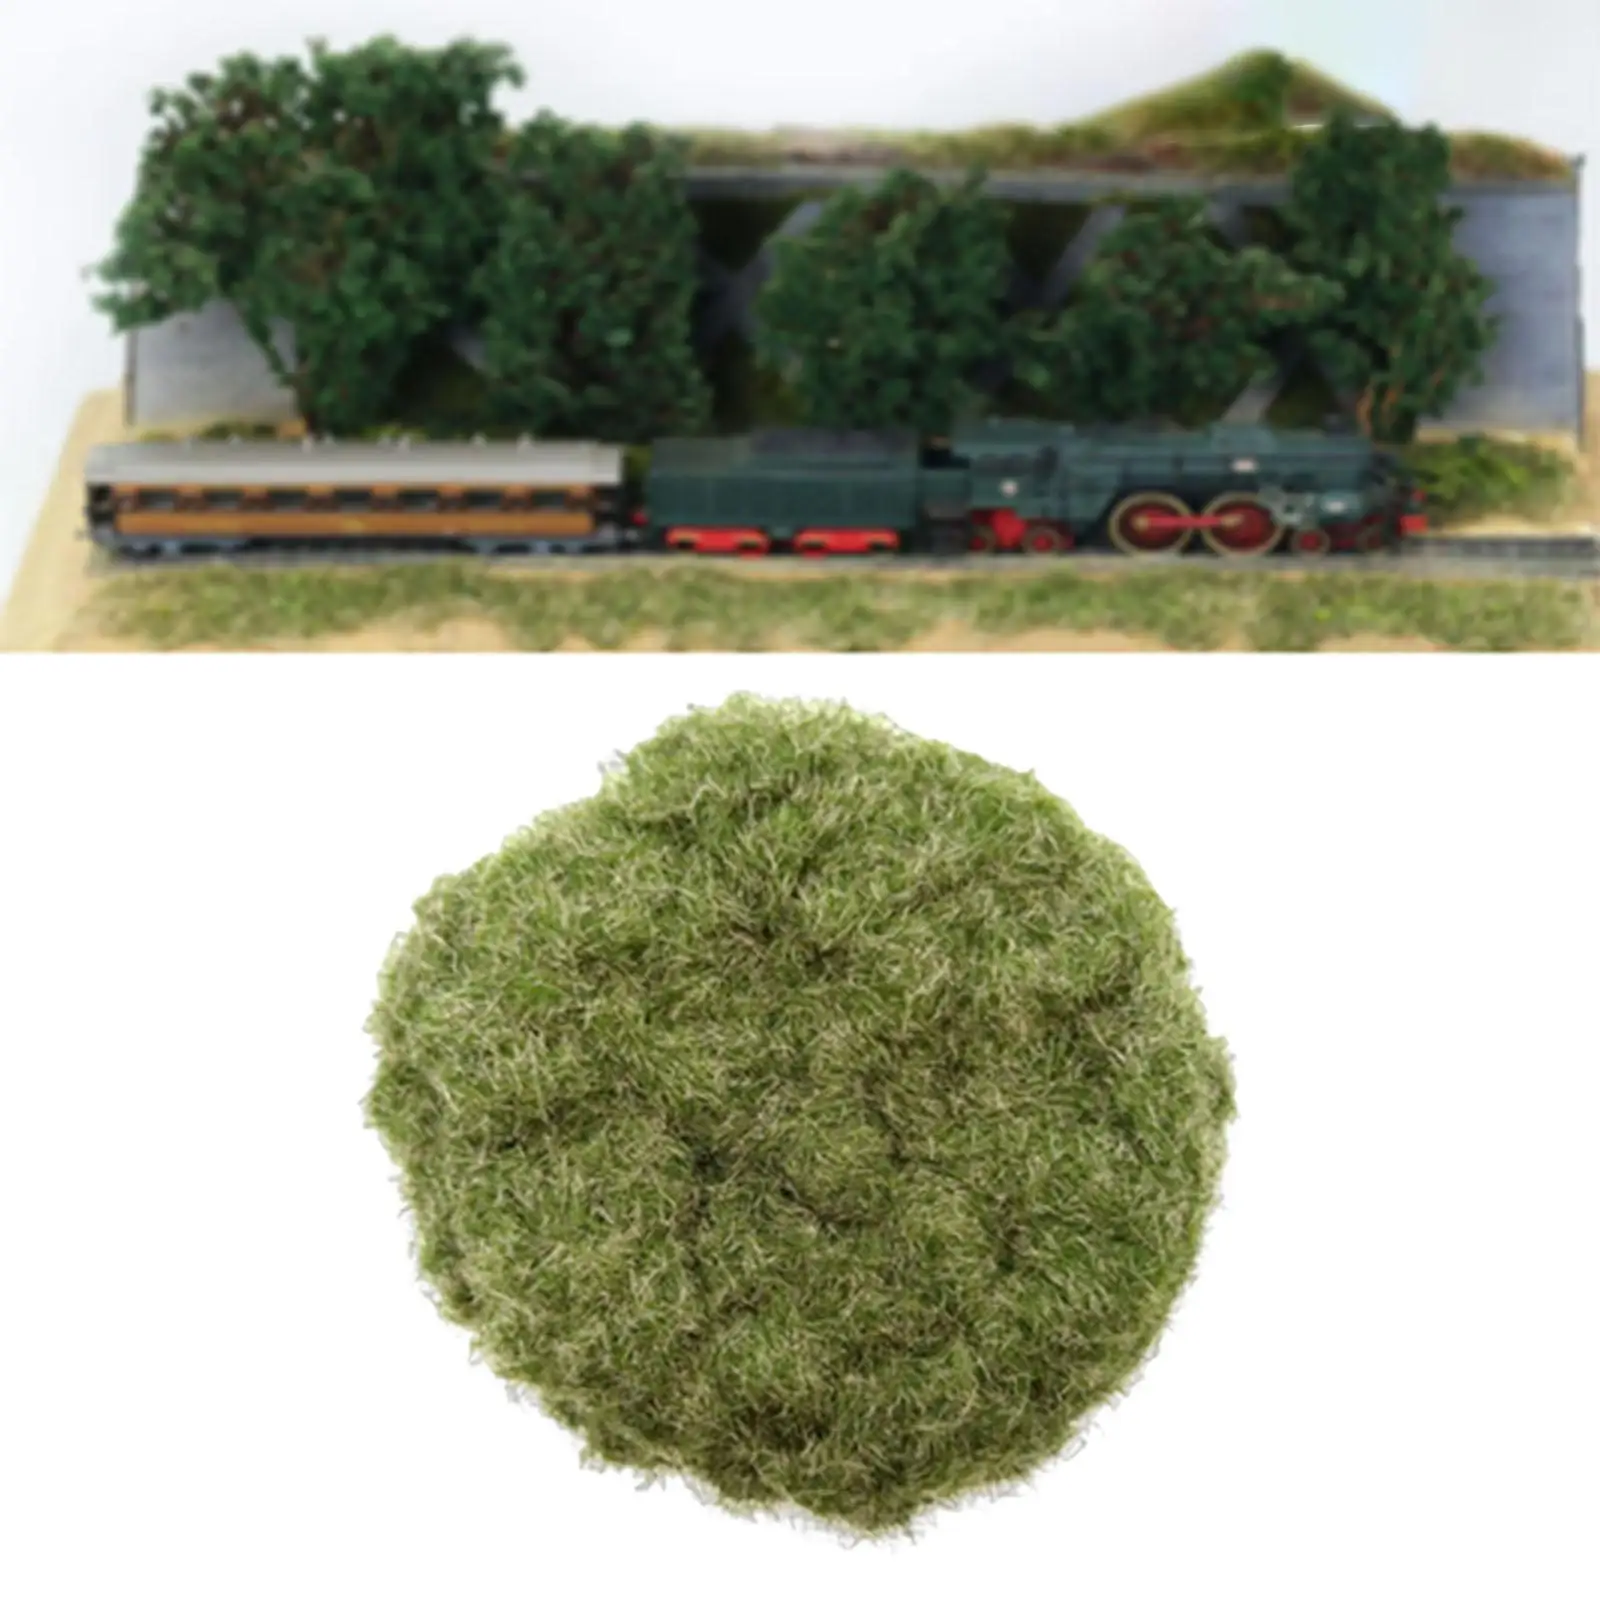 Model Artificial Grass Powder Garden of Fairy Craft Railway Layout Scenery 320ml